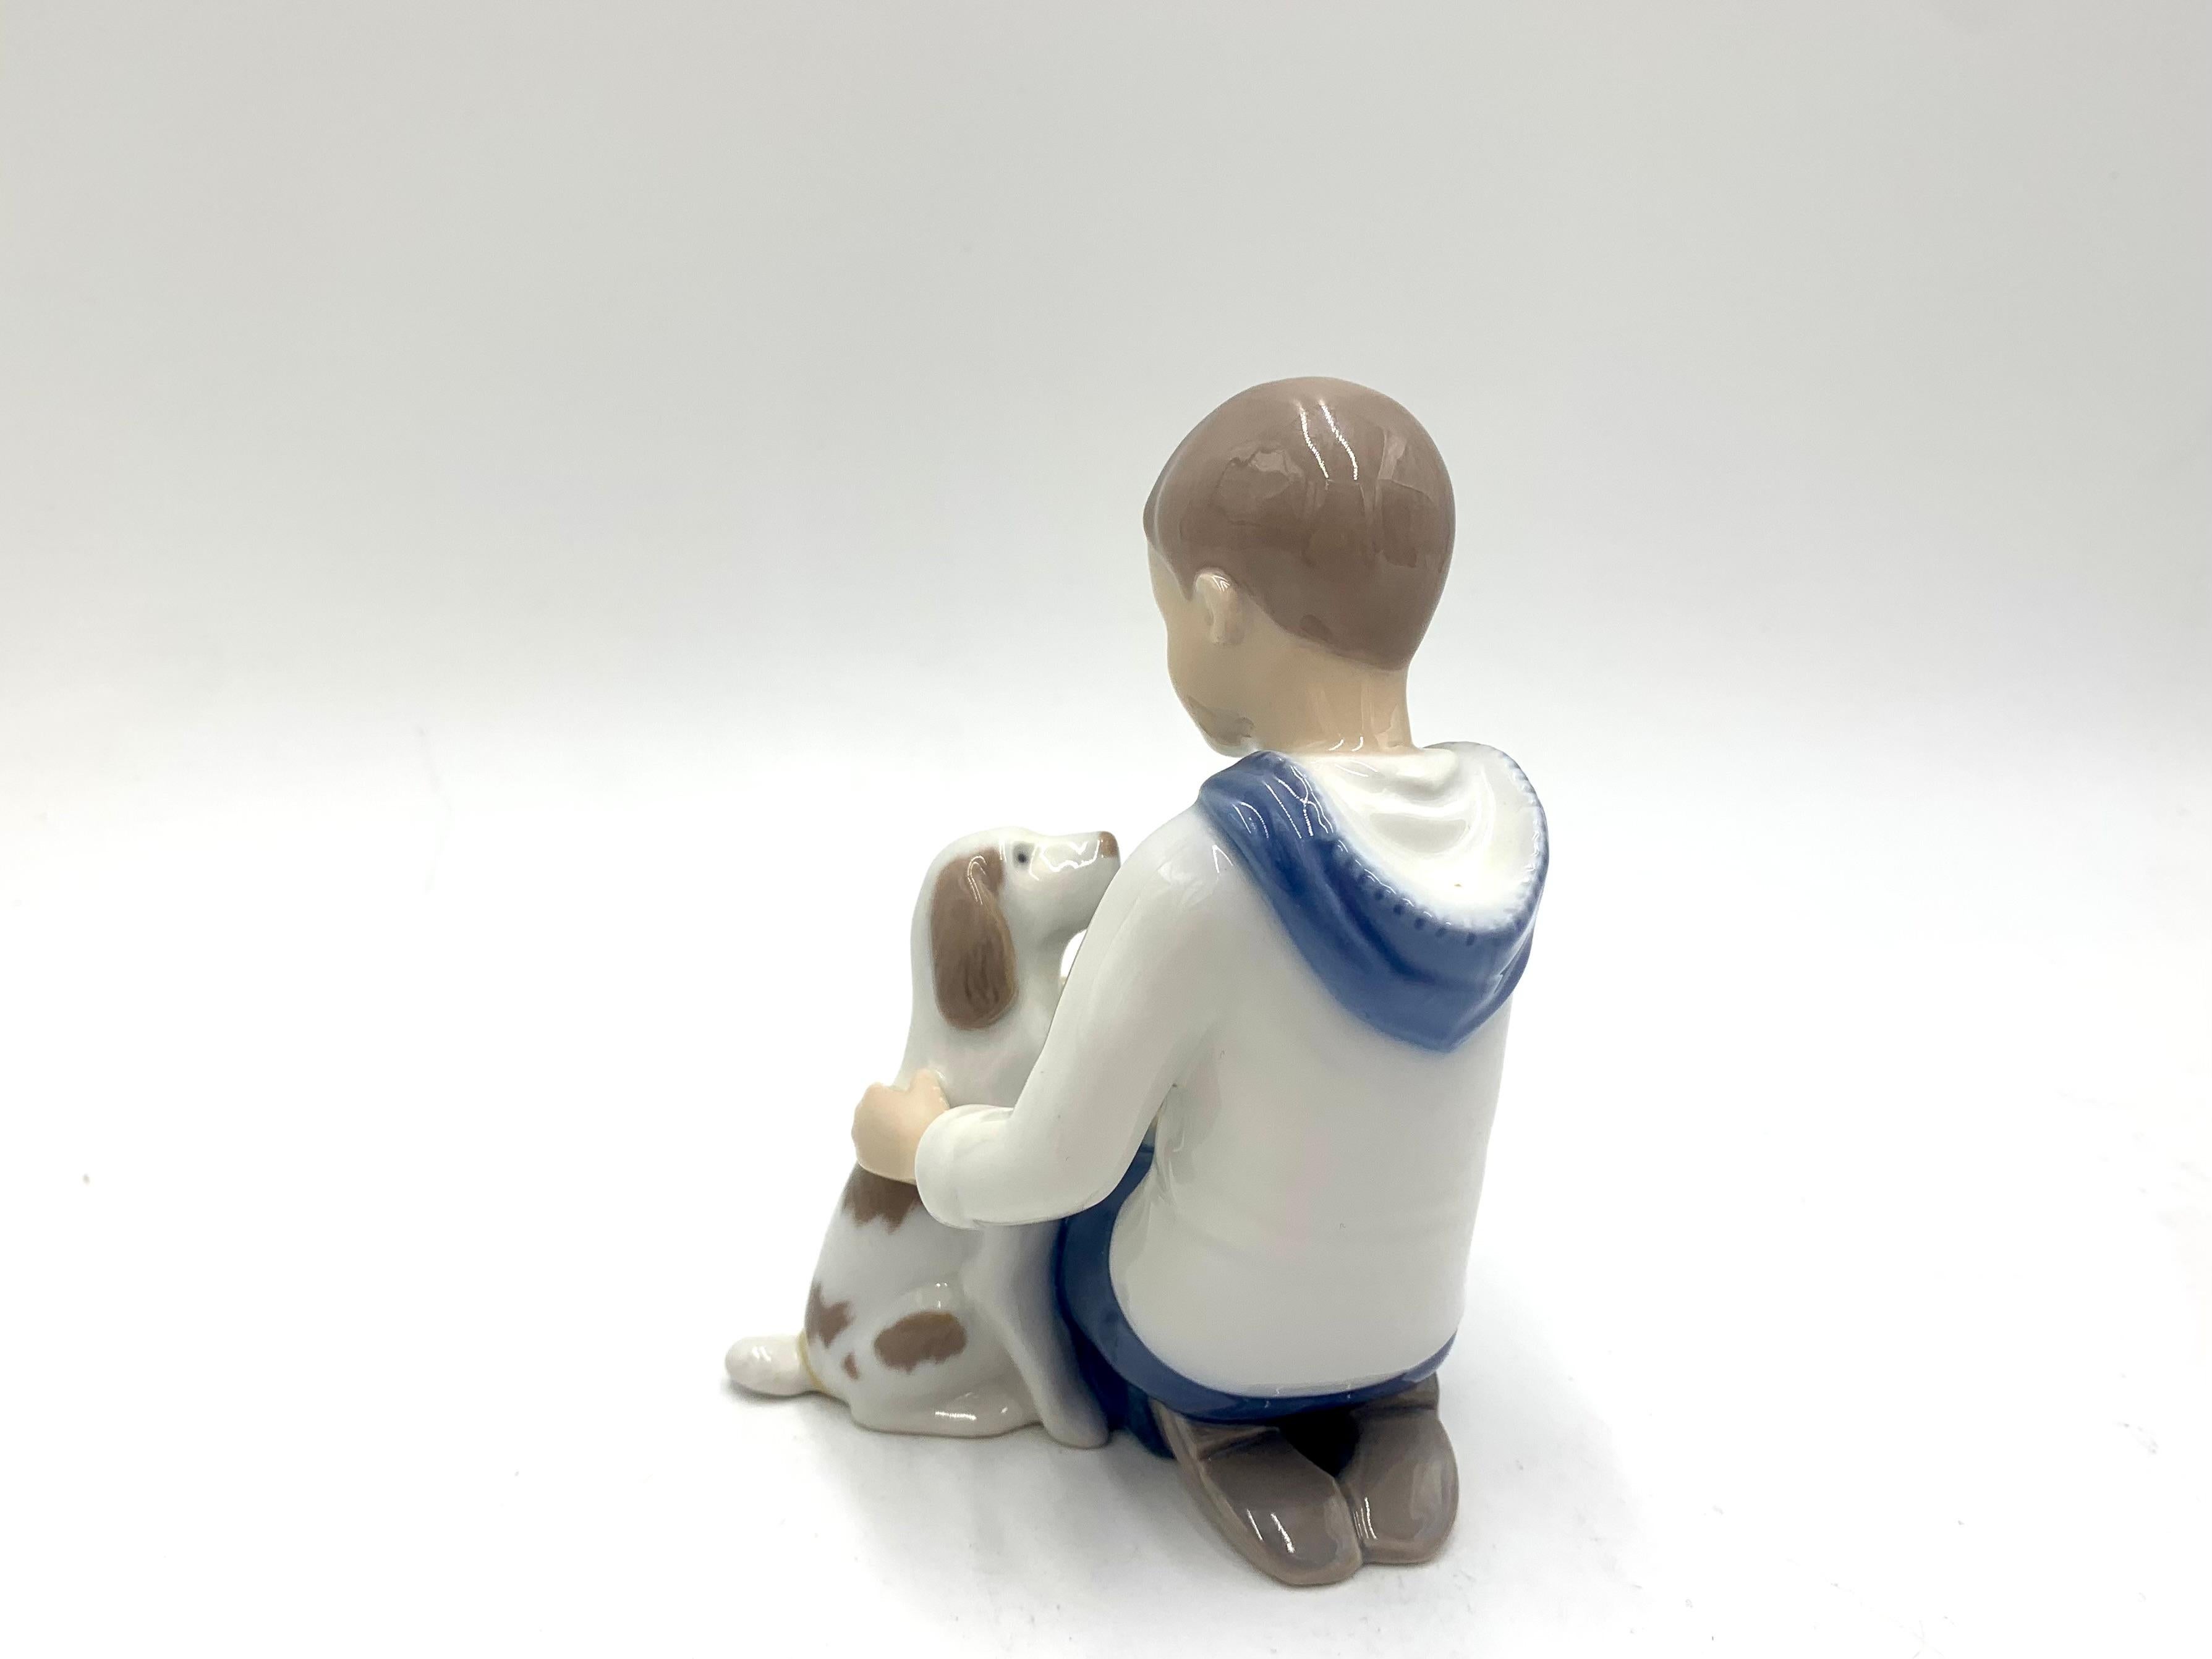 Danish Porcelain Figurine of a Boy with a Dog, Bing & Grondahl, Denmark, 1950s